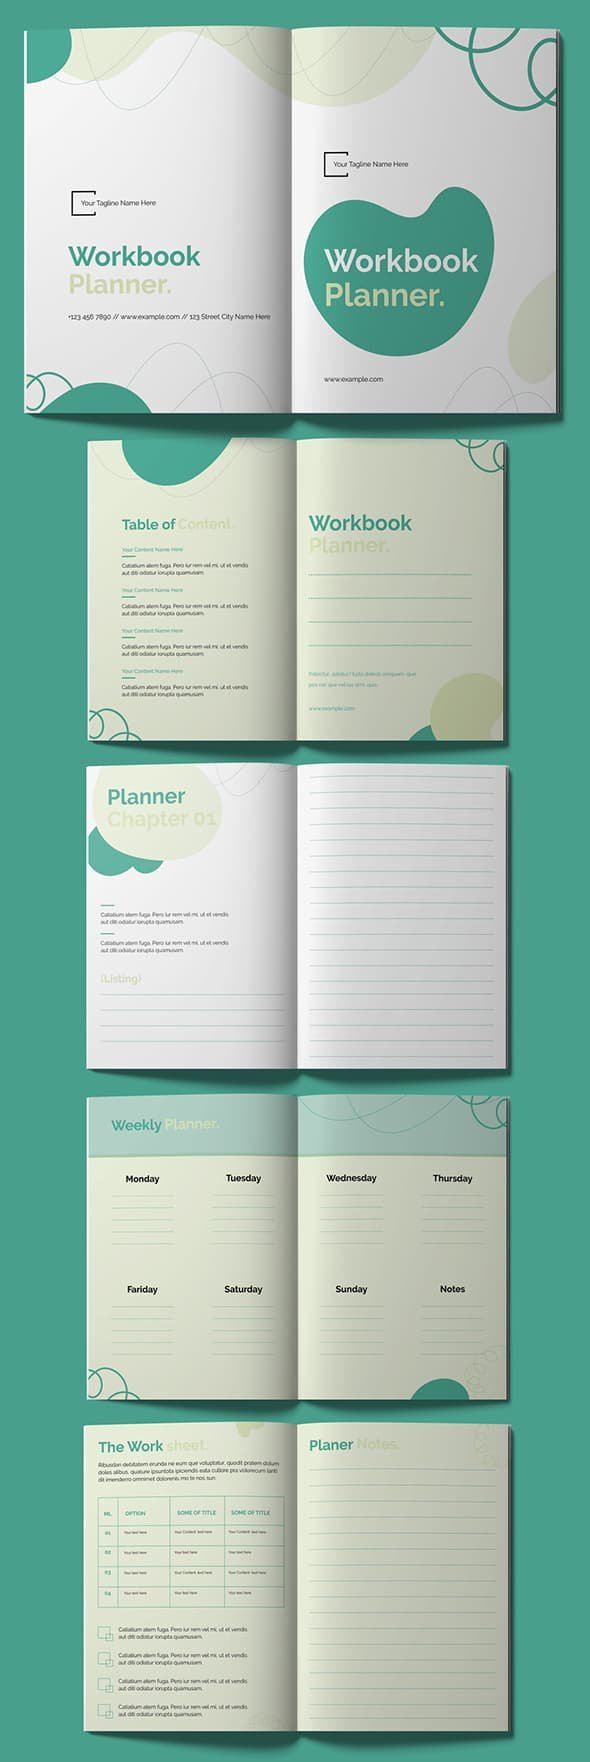 AdobeStock - Workbook Planner Design Template - 605957459